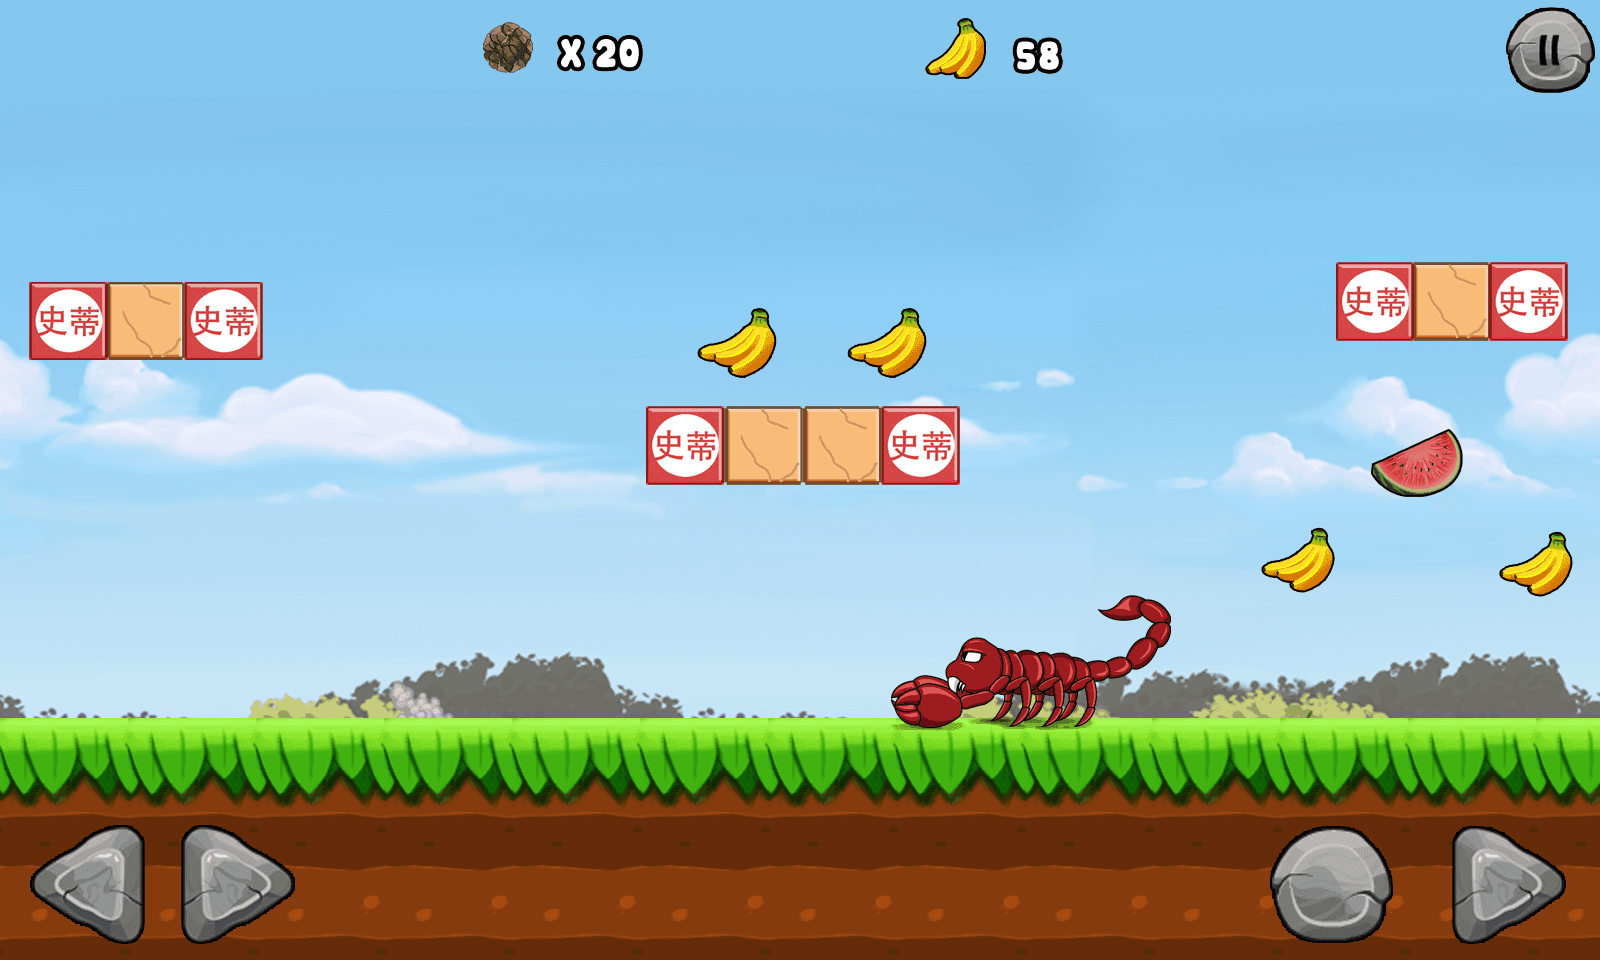 Screenshot 1 of Jungle Adventures Juegos 430.0